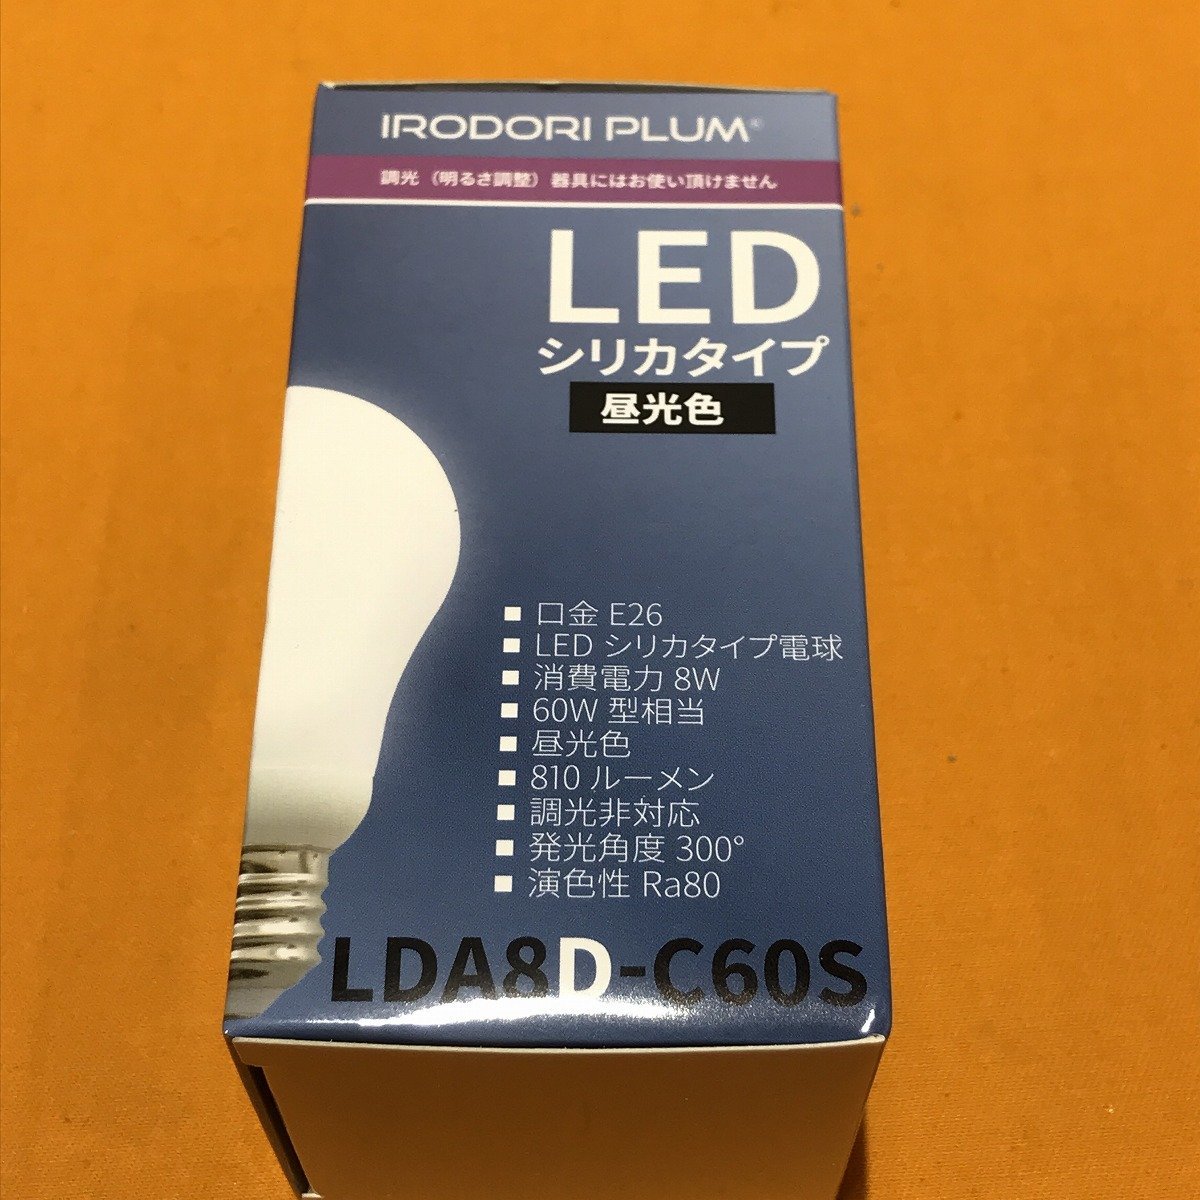 LED電球 (10個セット) ビームテック LDA8D-C60S 昼光色 60W 810lm E26 シリカタイプ IRODORI PRUM サテイゴー_画像5